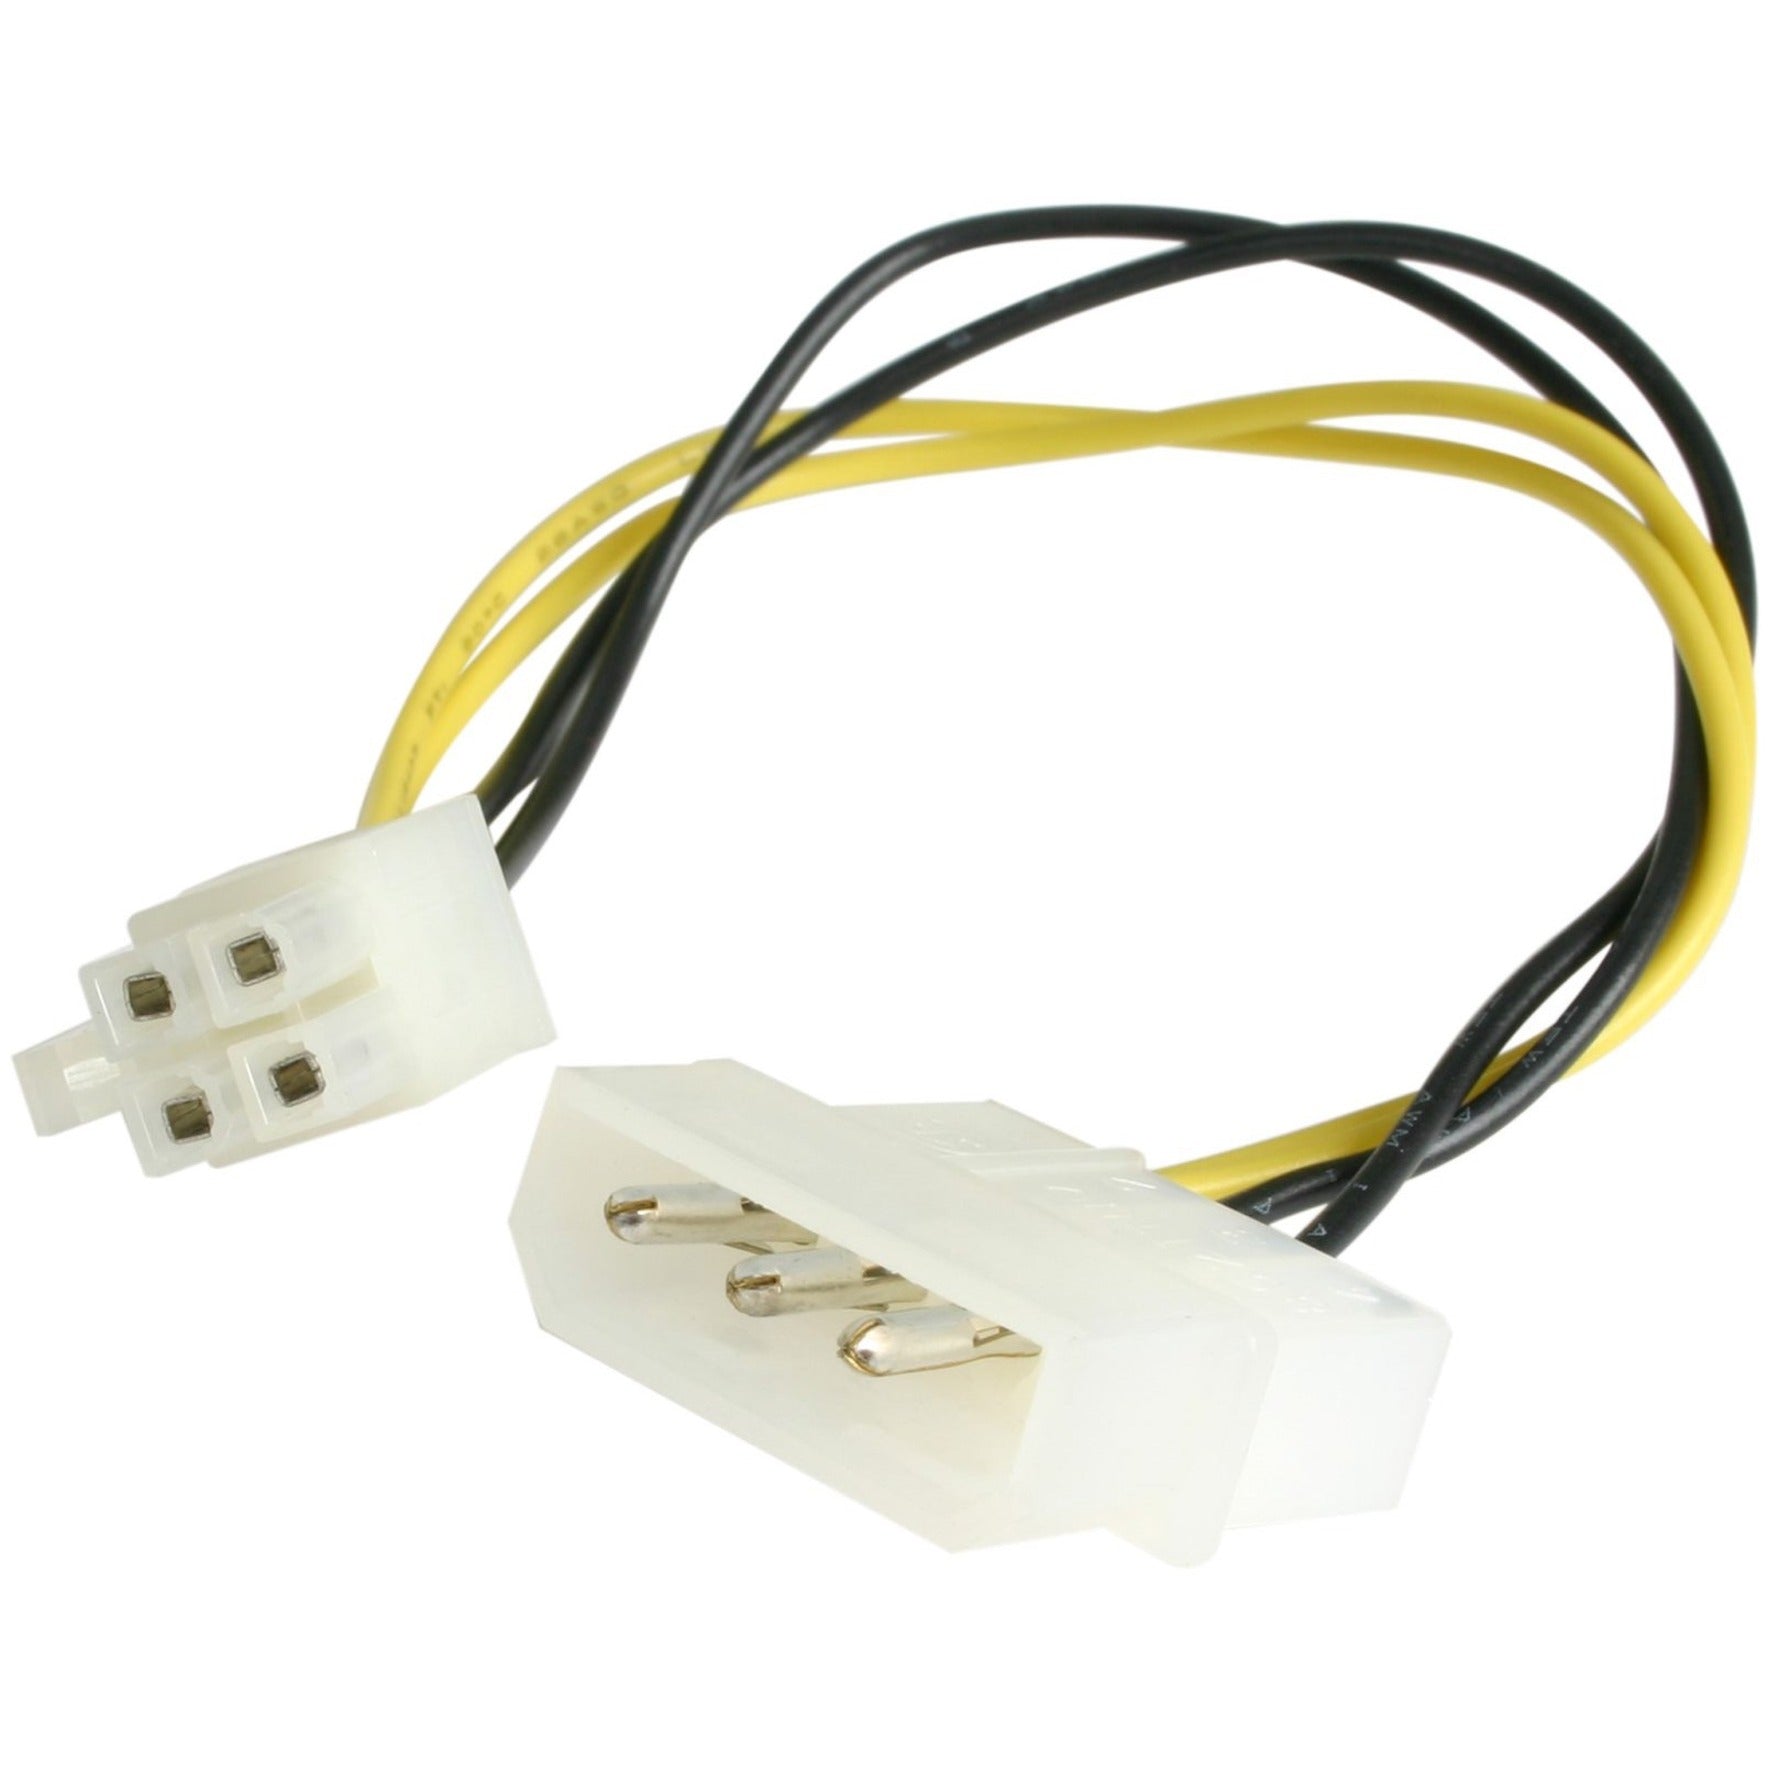 StarTech.com LP4P4ADAP Power Cable Adapter, 6" Length, 12V DC Voltage Rating